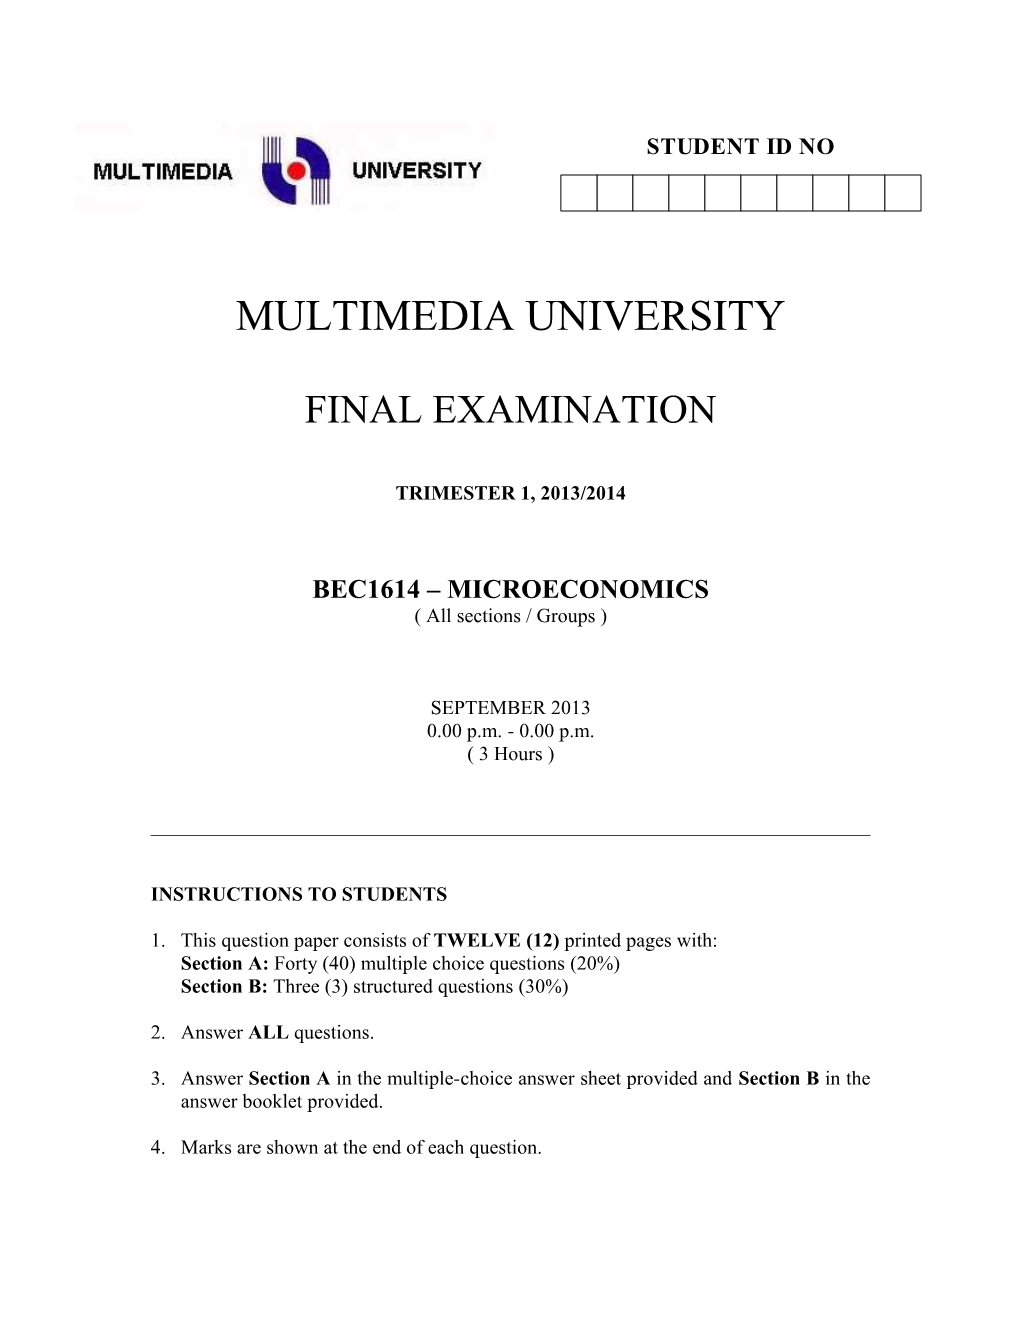 Multimedia University